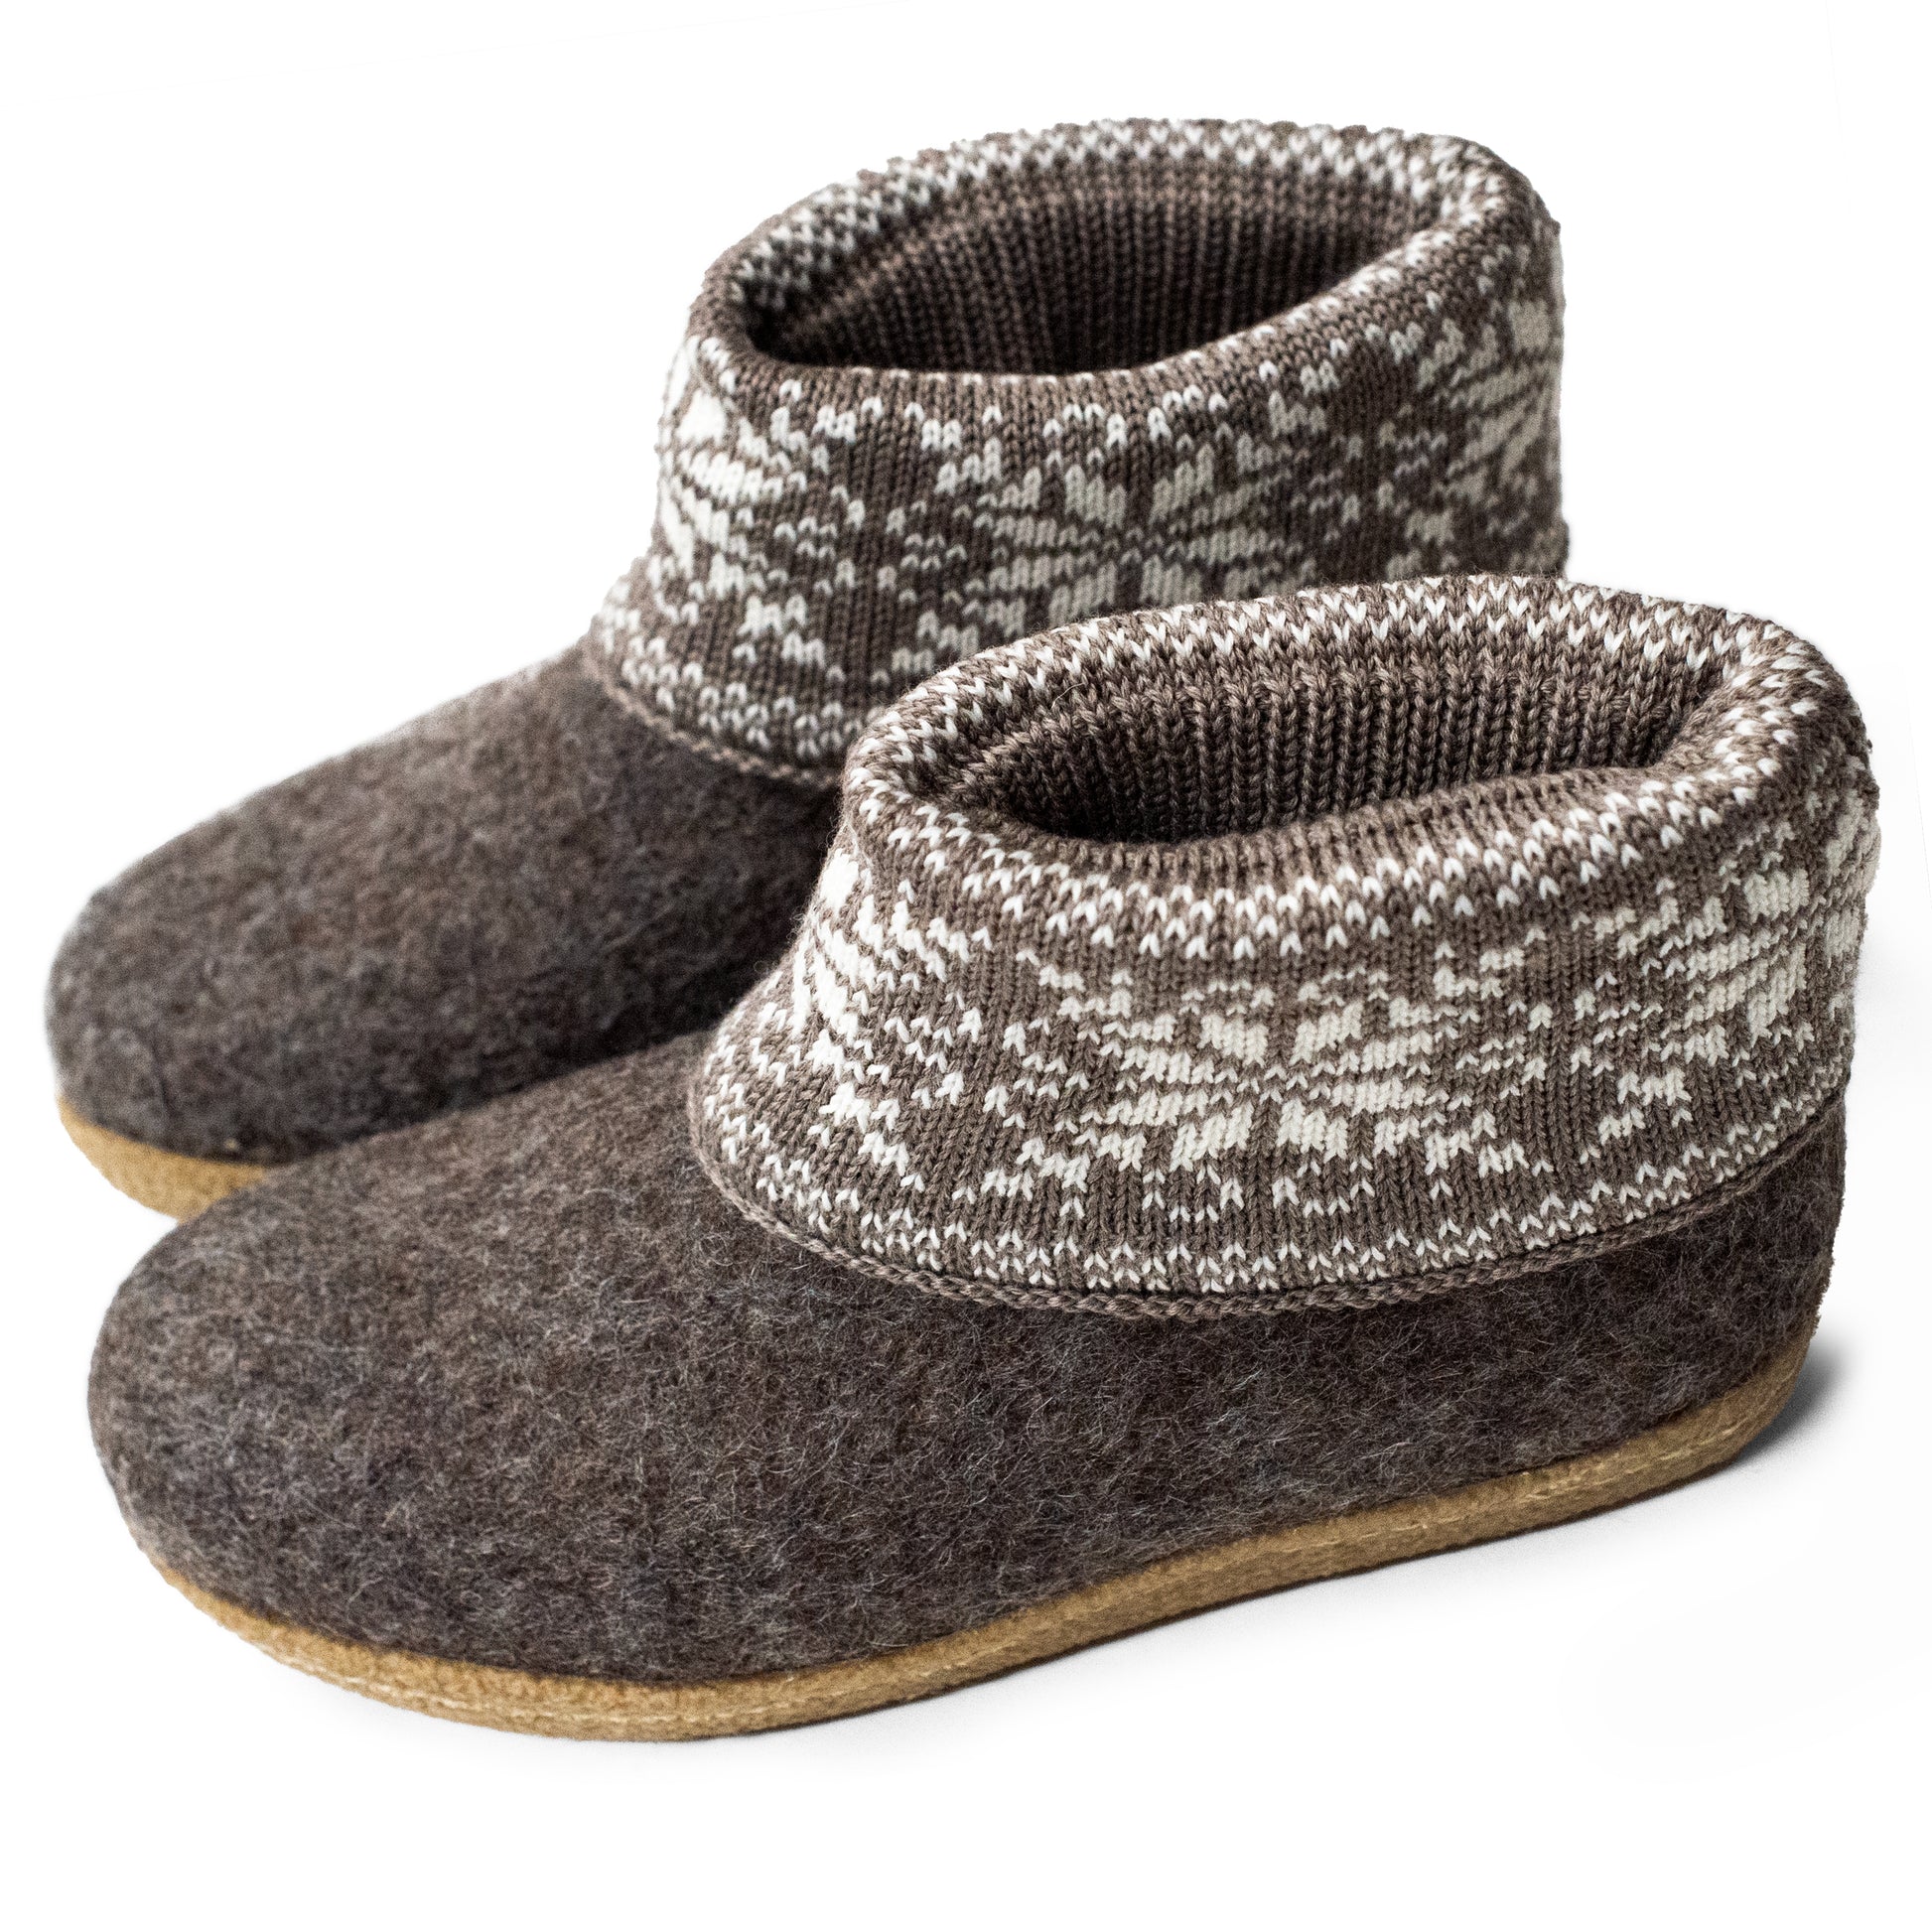 [felted_slippers],[wool_slippers], [burebure_slippers], [warm_wool_slippers], Women's SKANDI WOOBOOTS with Knitted Leg Warmers, Bure Bure wool slippers